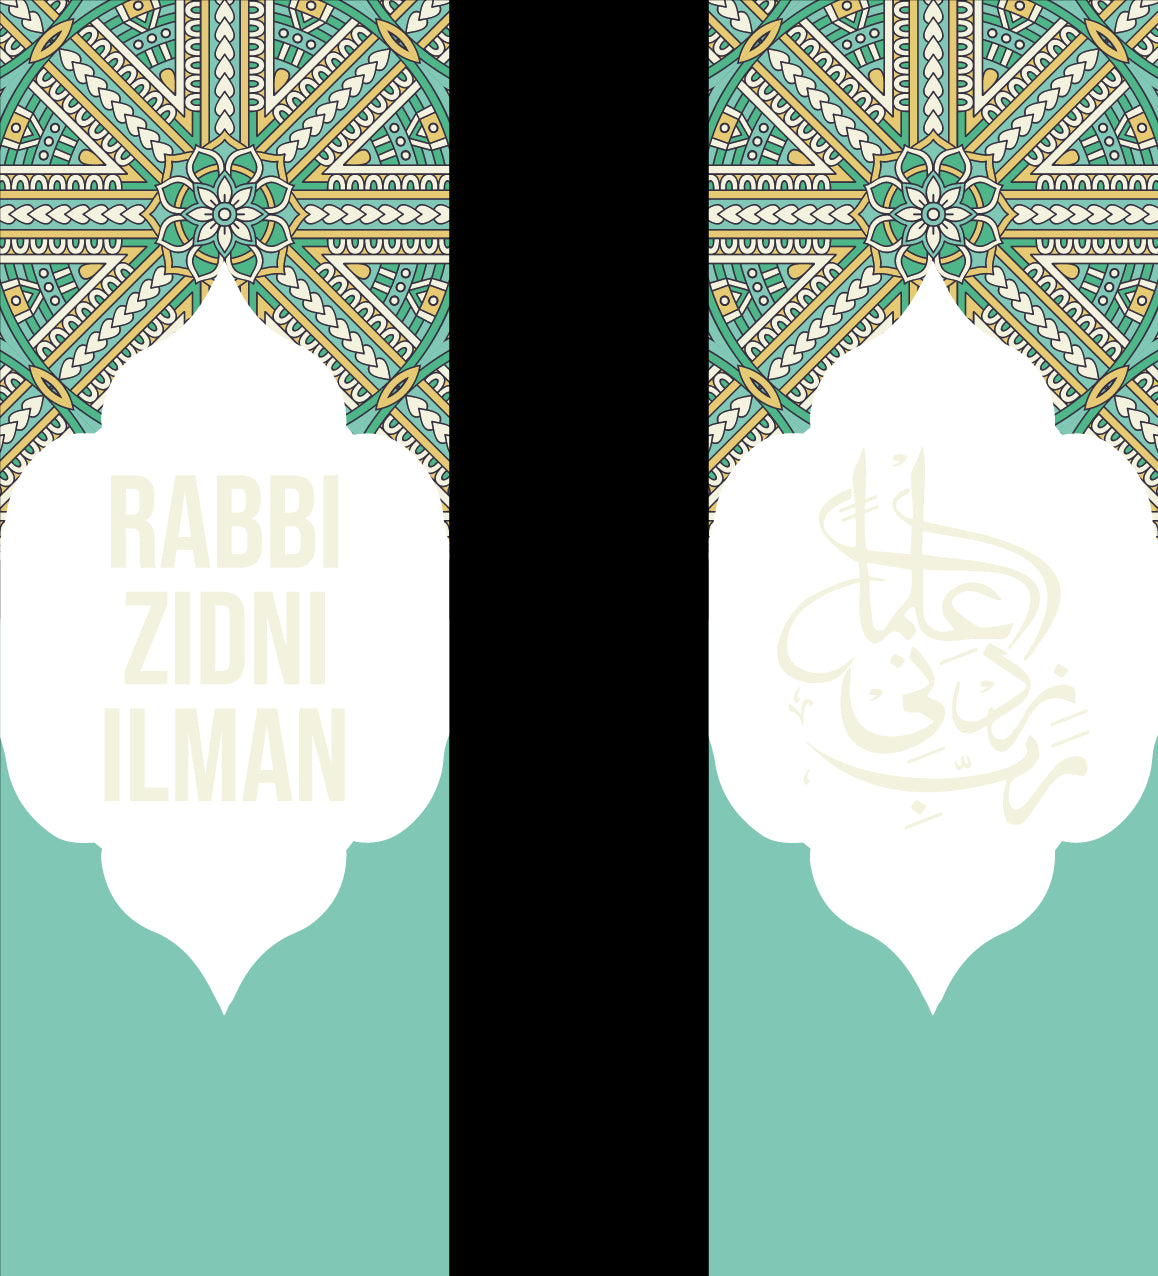 Grote boekenlegger Rabbi Zidni Ilman - Mosaic Green